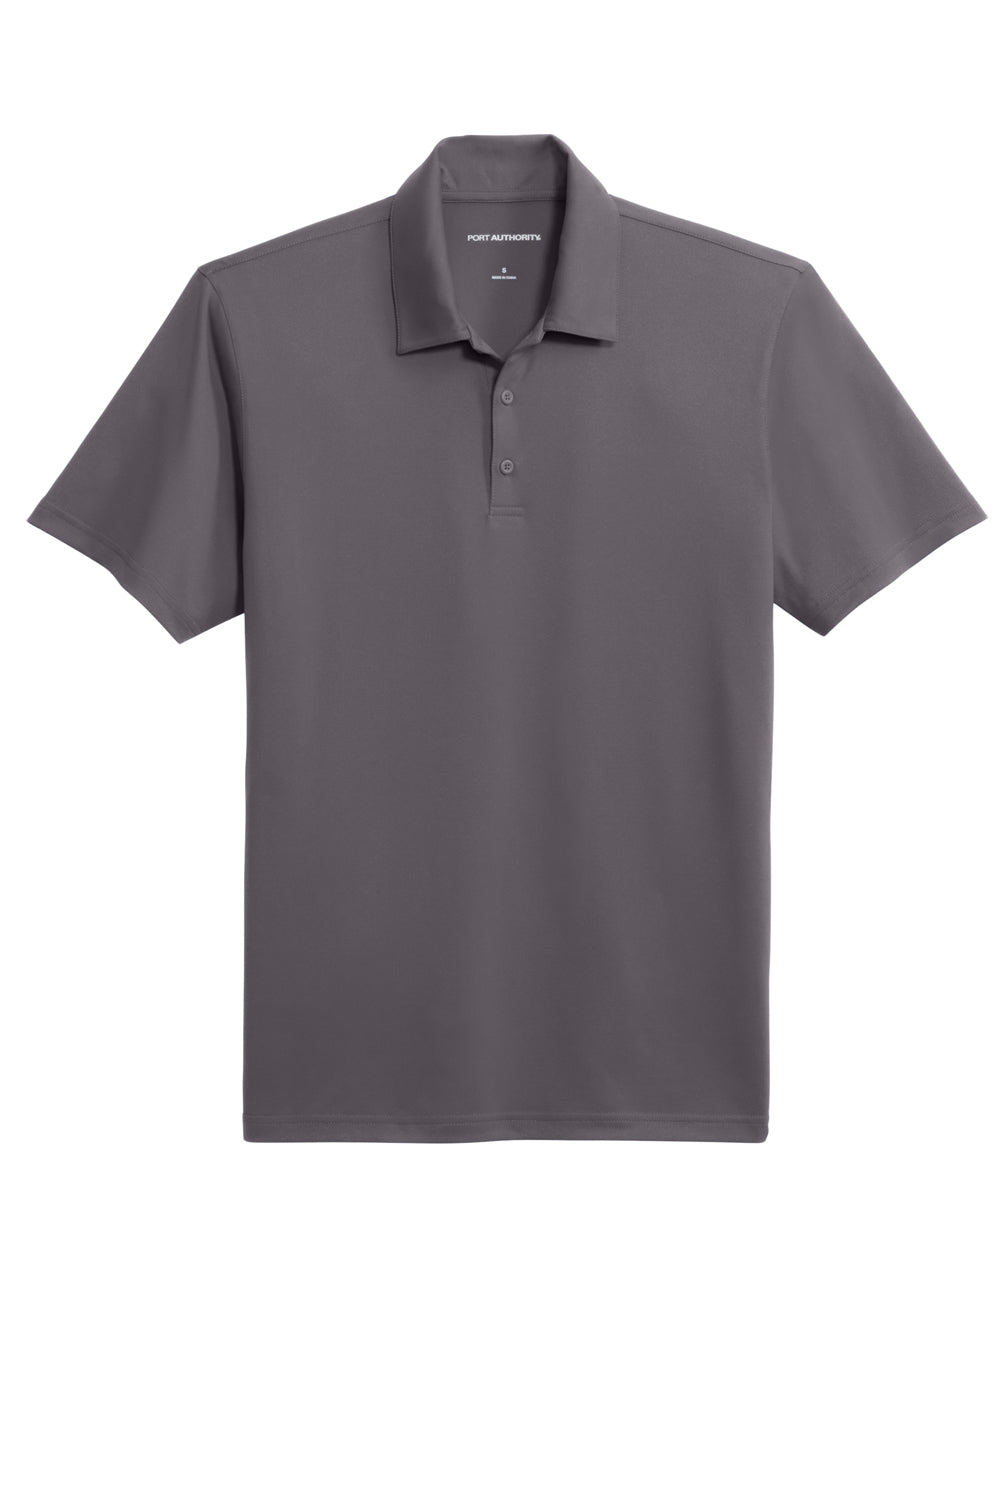 Port Authority K398 Staff Performance Short Sleeve Polo Shirt Graphite Grey Flat Front